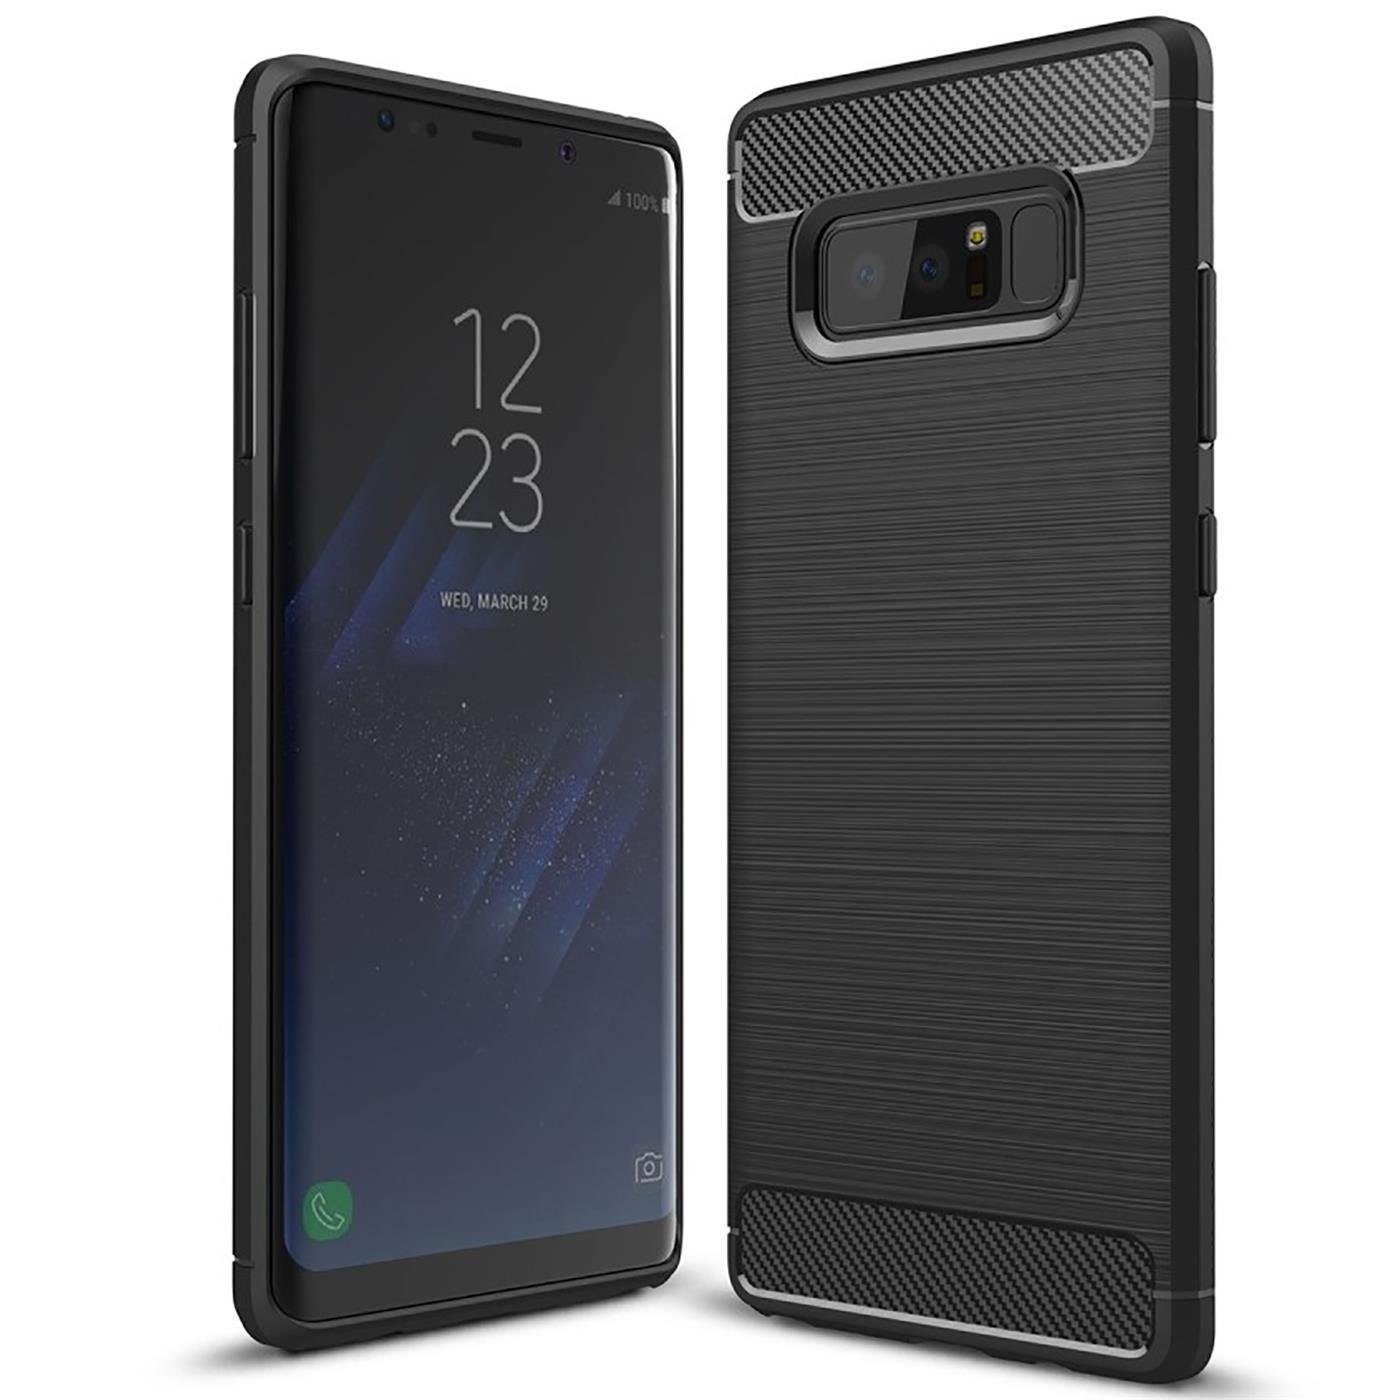 CoolGadget Handyhülle Carbon Handy Hülle für Samsung Galaxy Note 8 6,3 Zoll, robuste Telefonhülle Case Schutzhülle für Samsung Note 8 Hülle